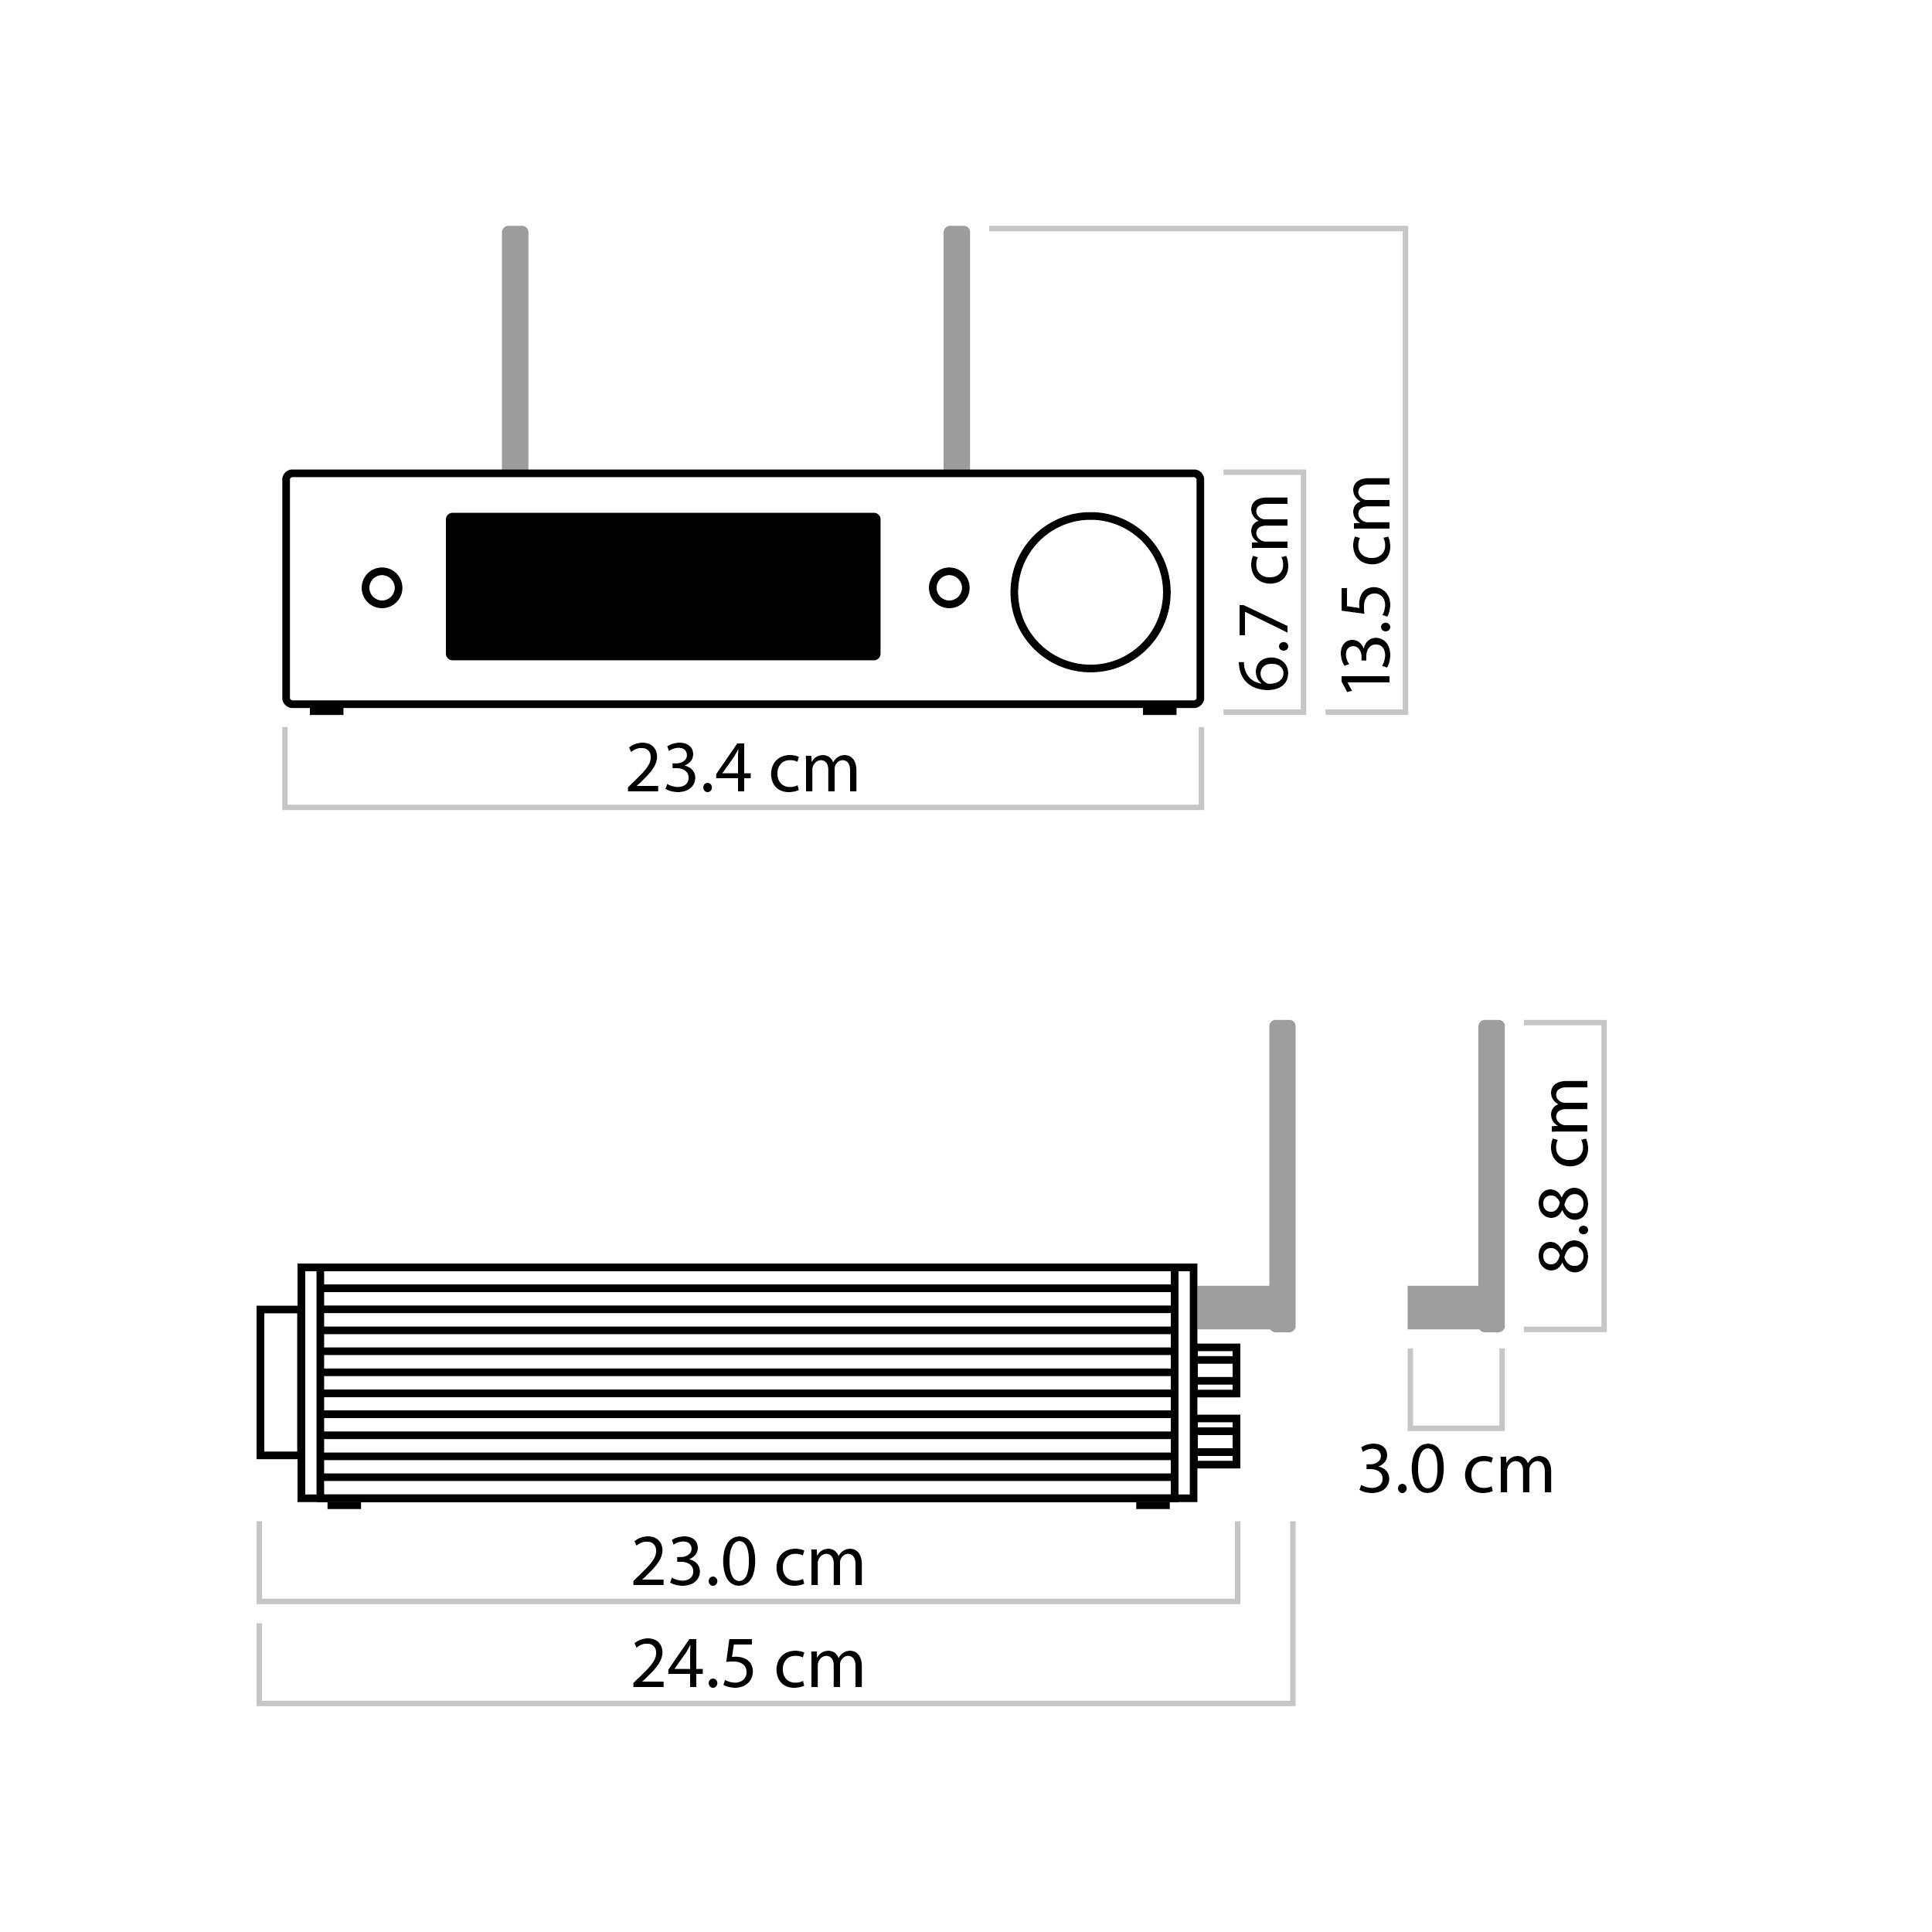 Nubert nuXinema Vorverstärker Voice+, preAV (Dolby 7.1.4, Atmos X-Room Schwarz Calibration)